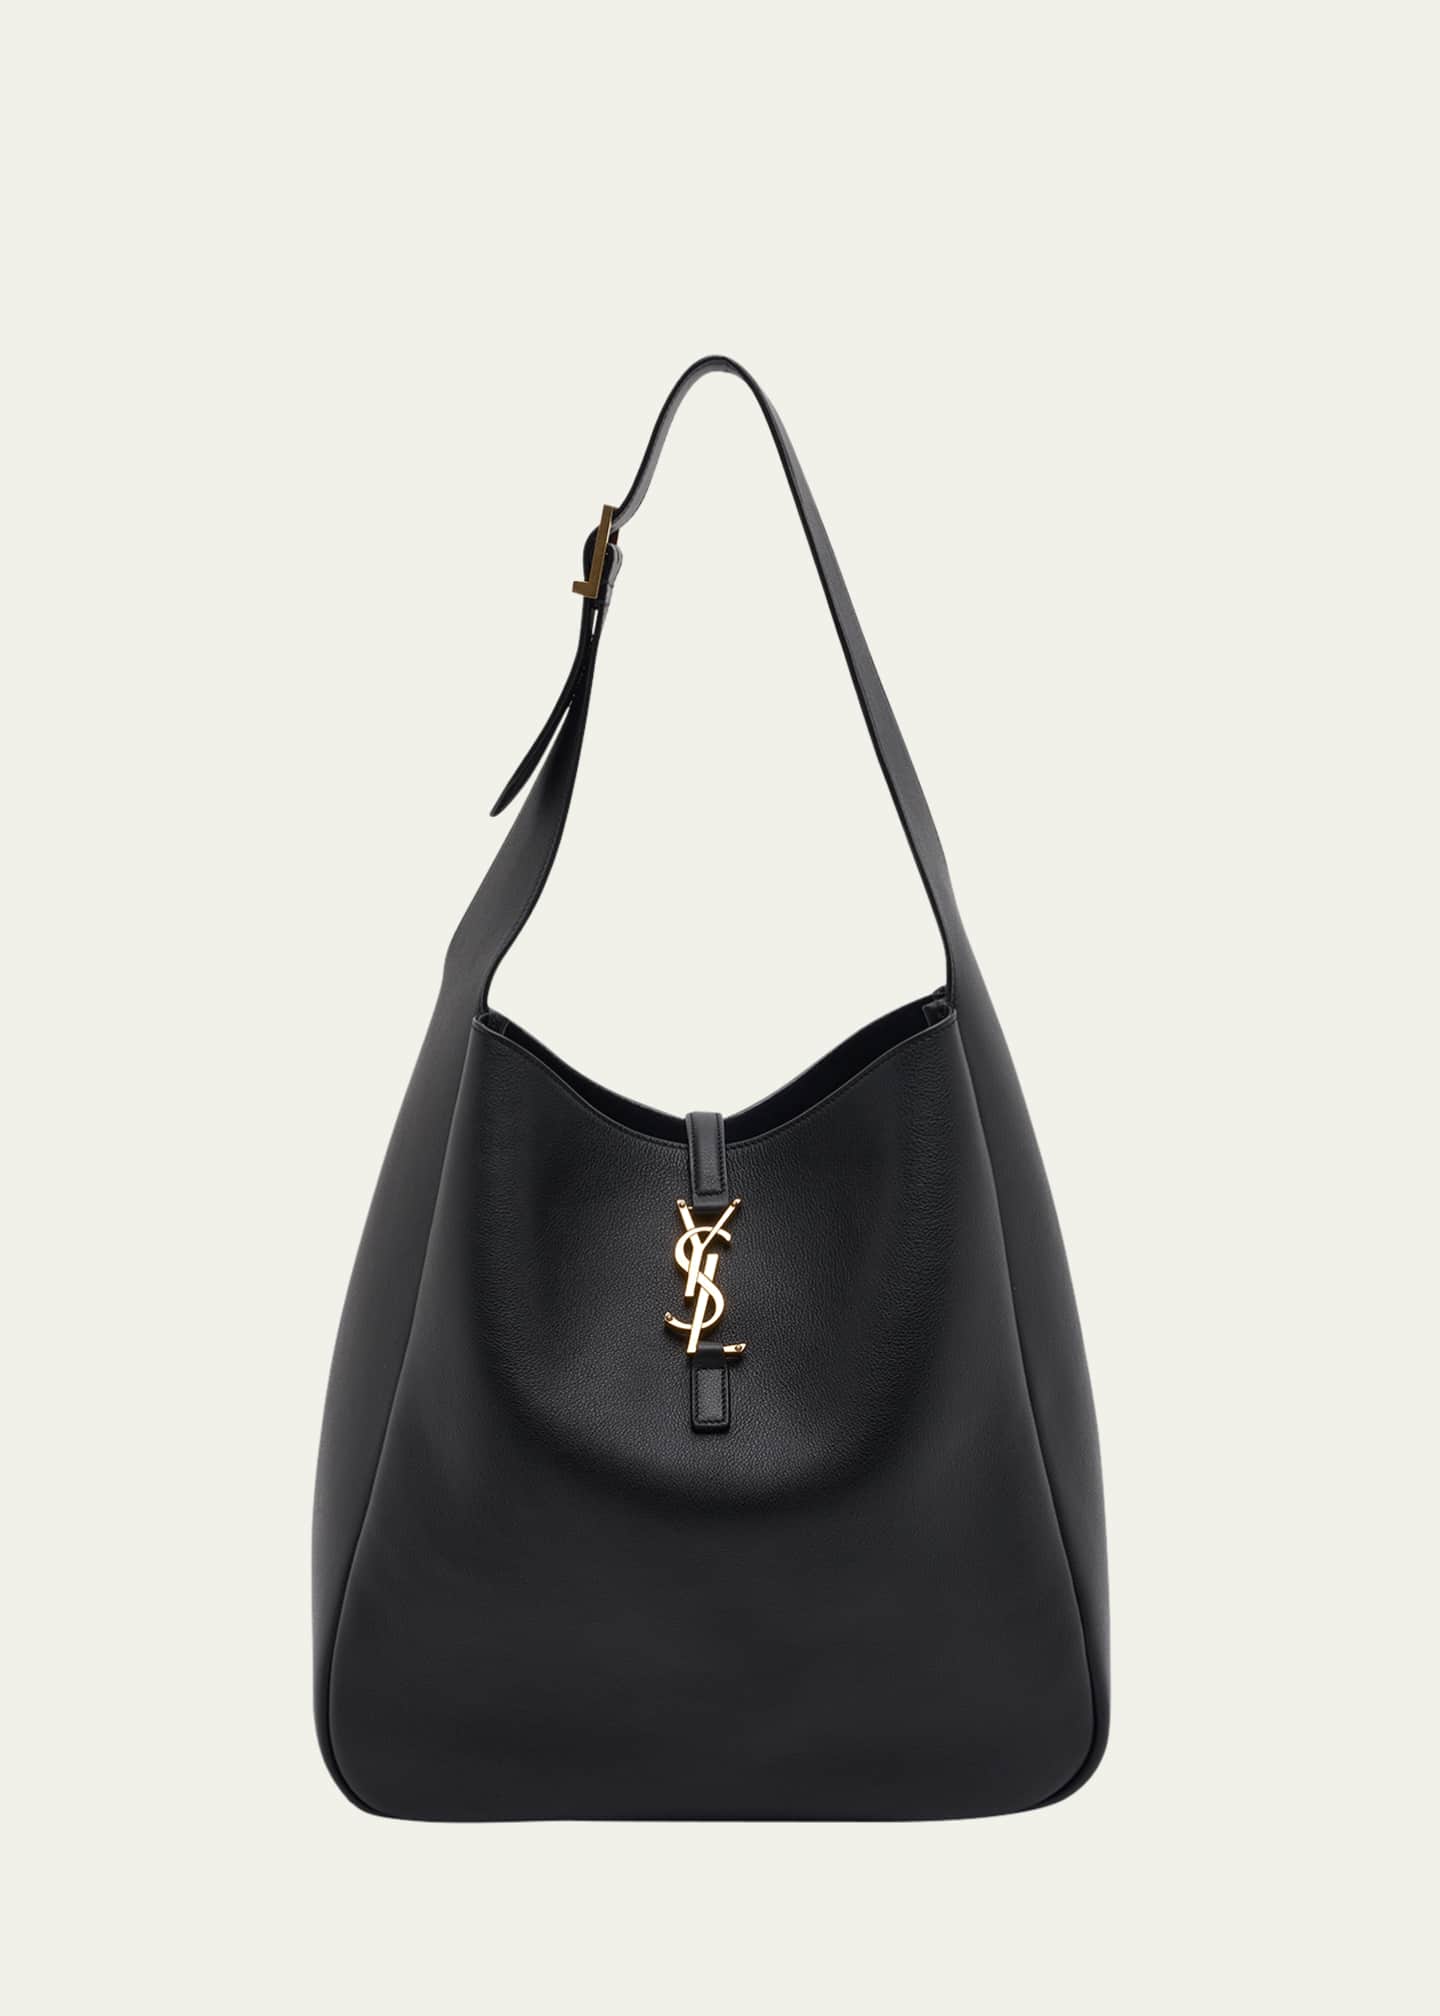 Saint Laurent Handbags for Women